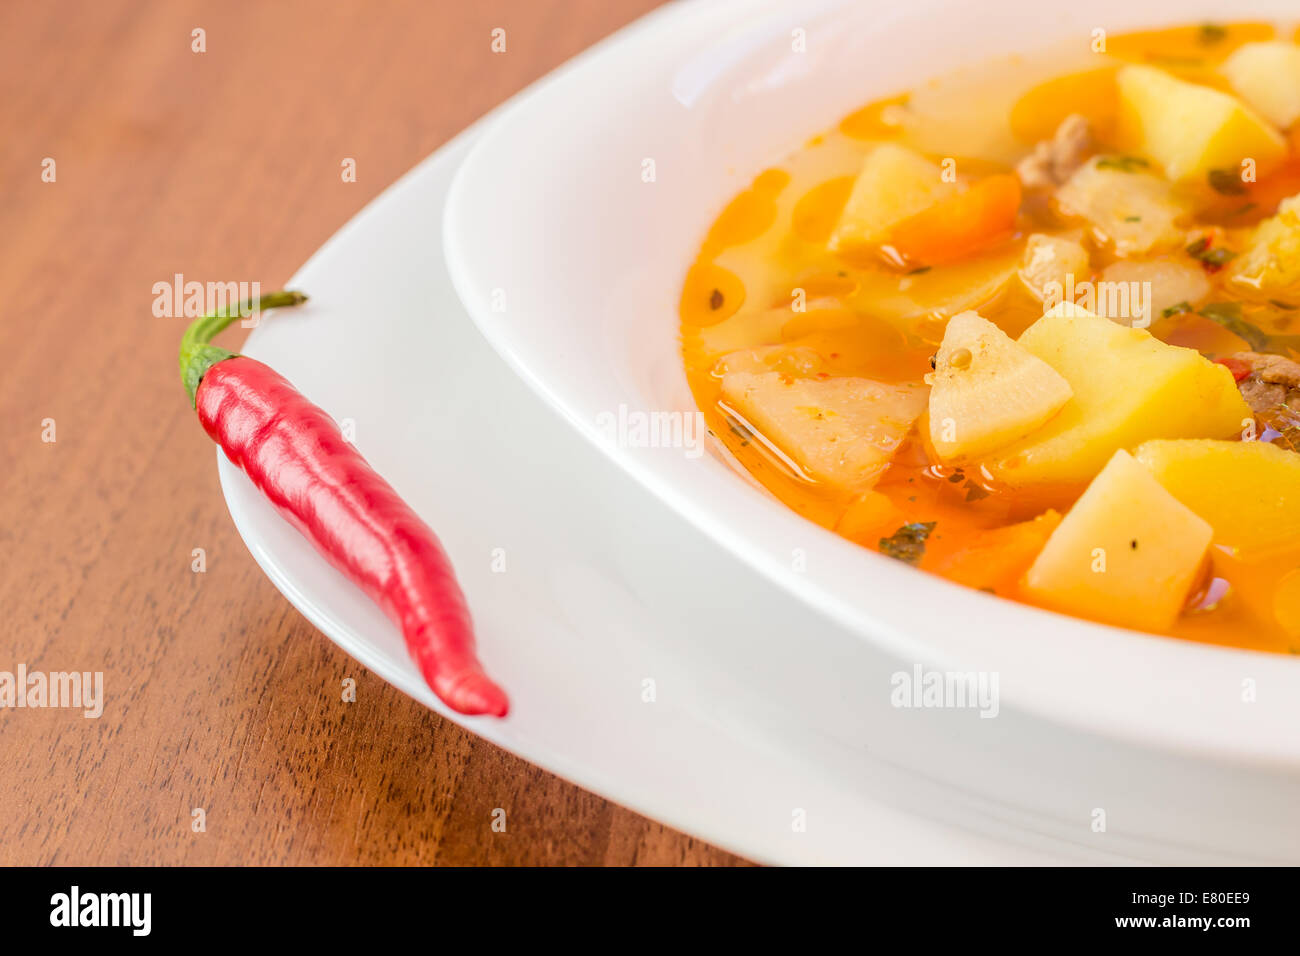 Hungarian goulash (gulyas) soup Stock Photo